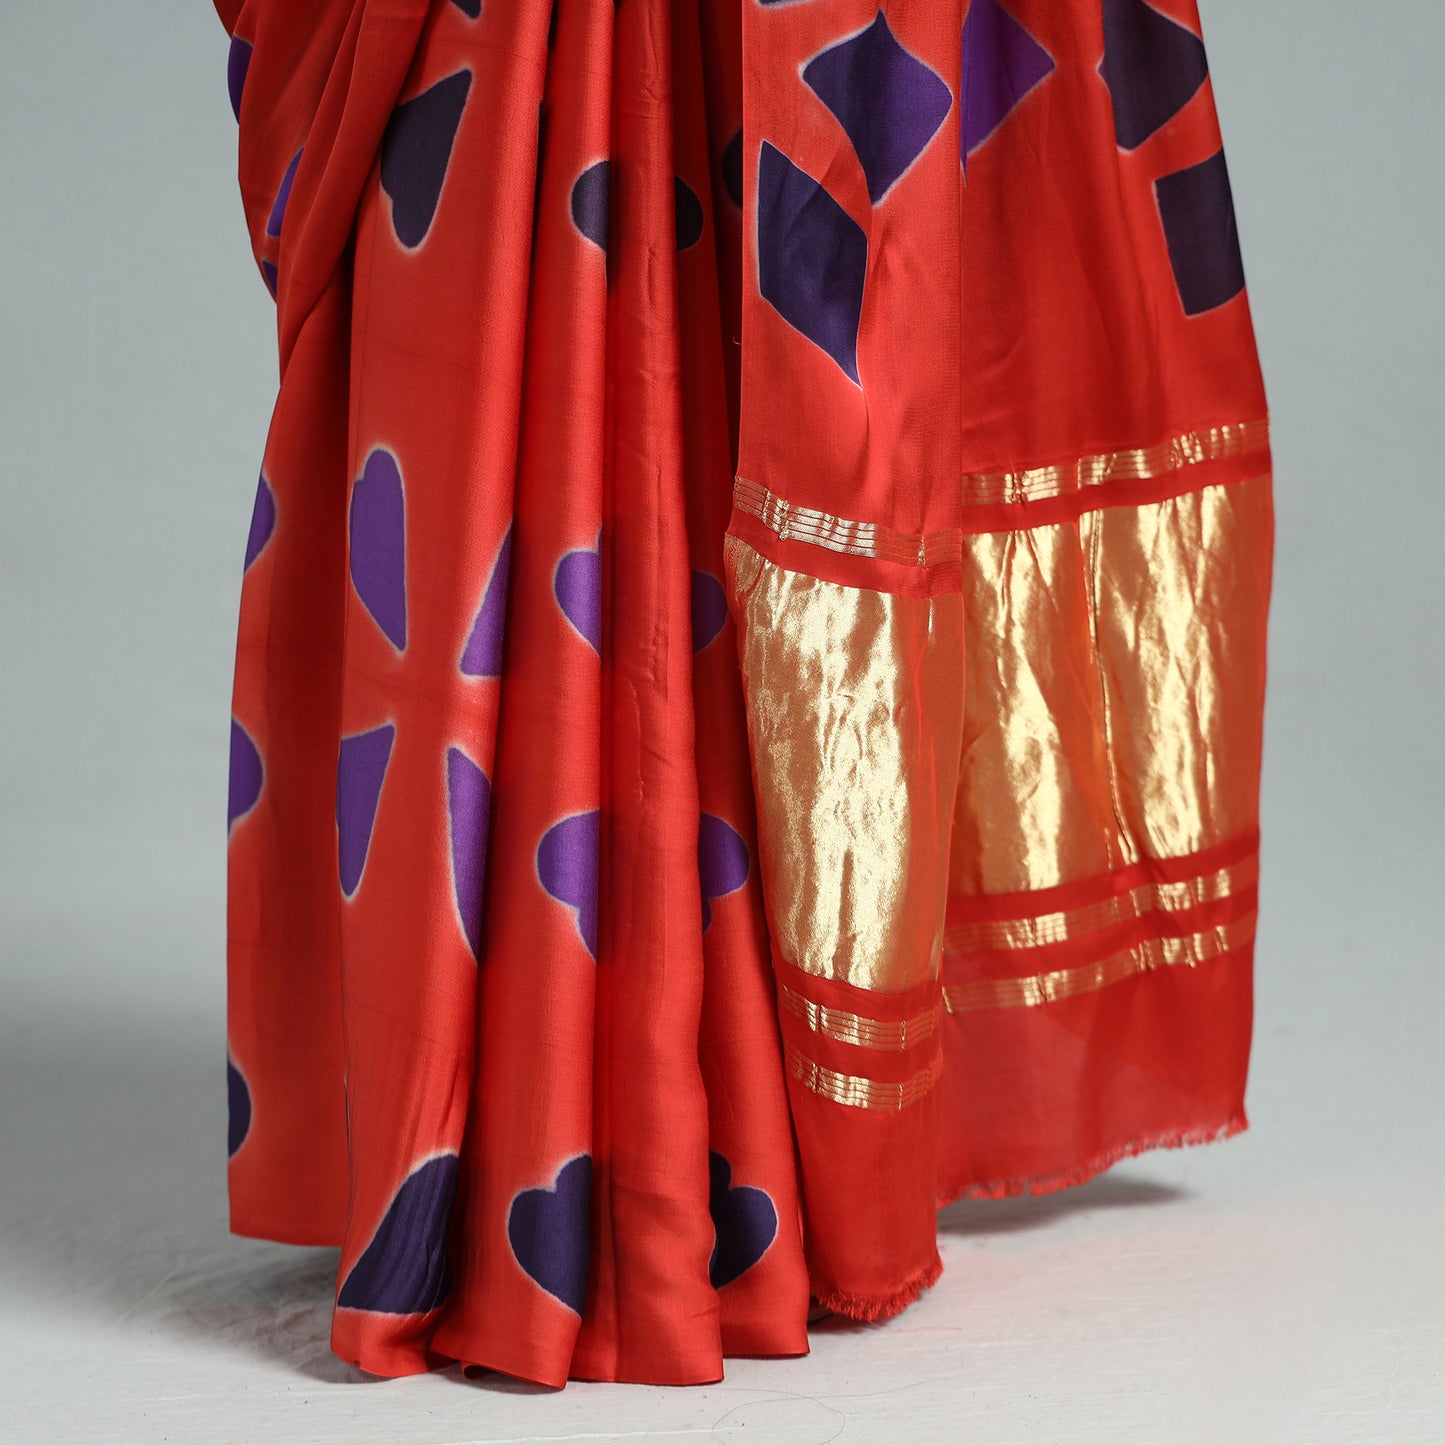 Red - Shibori Clamp Dyed Modal Silk Saree with Zari Border 03